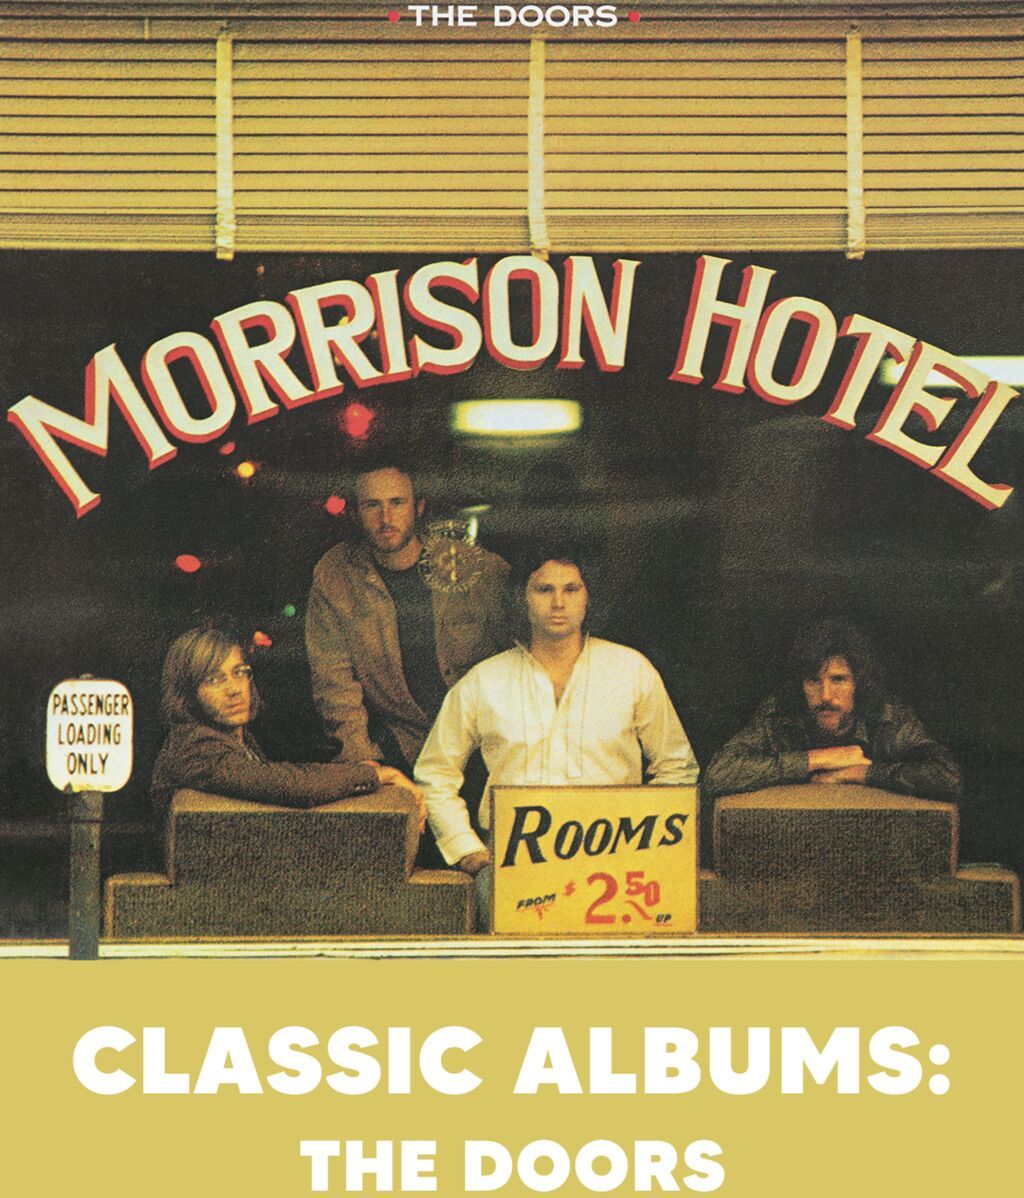 Portada del documental The Doors: Morrison Hotel.